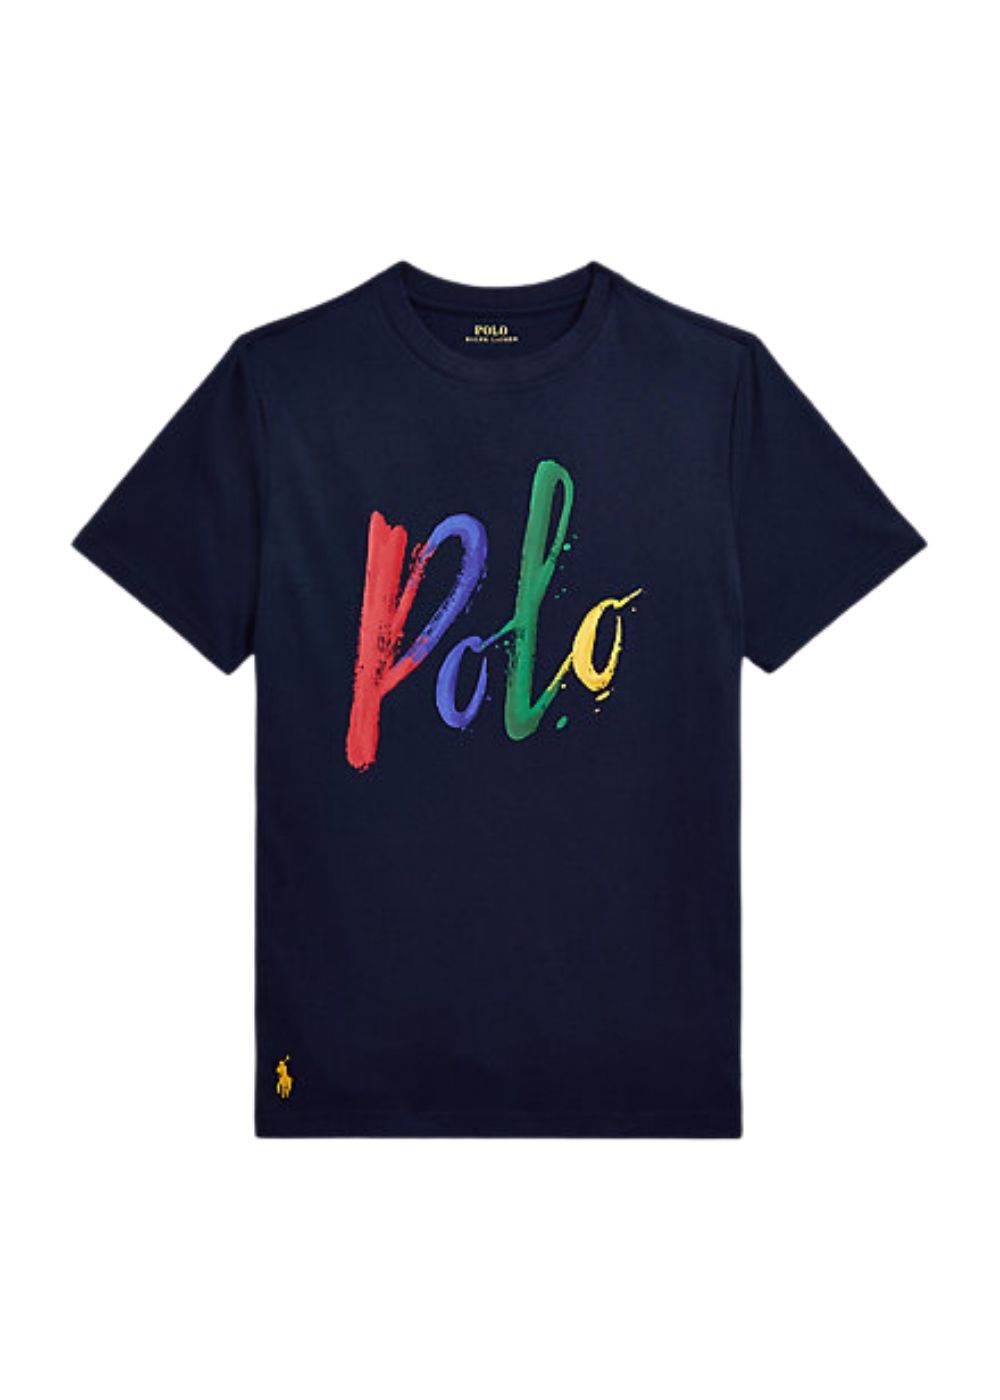 Featured image for “Polo Ralph Lauren T-shirt Logo”